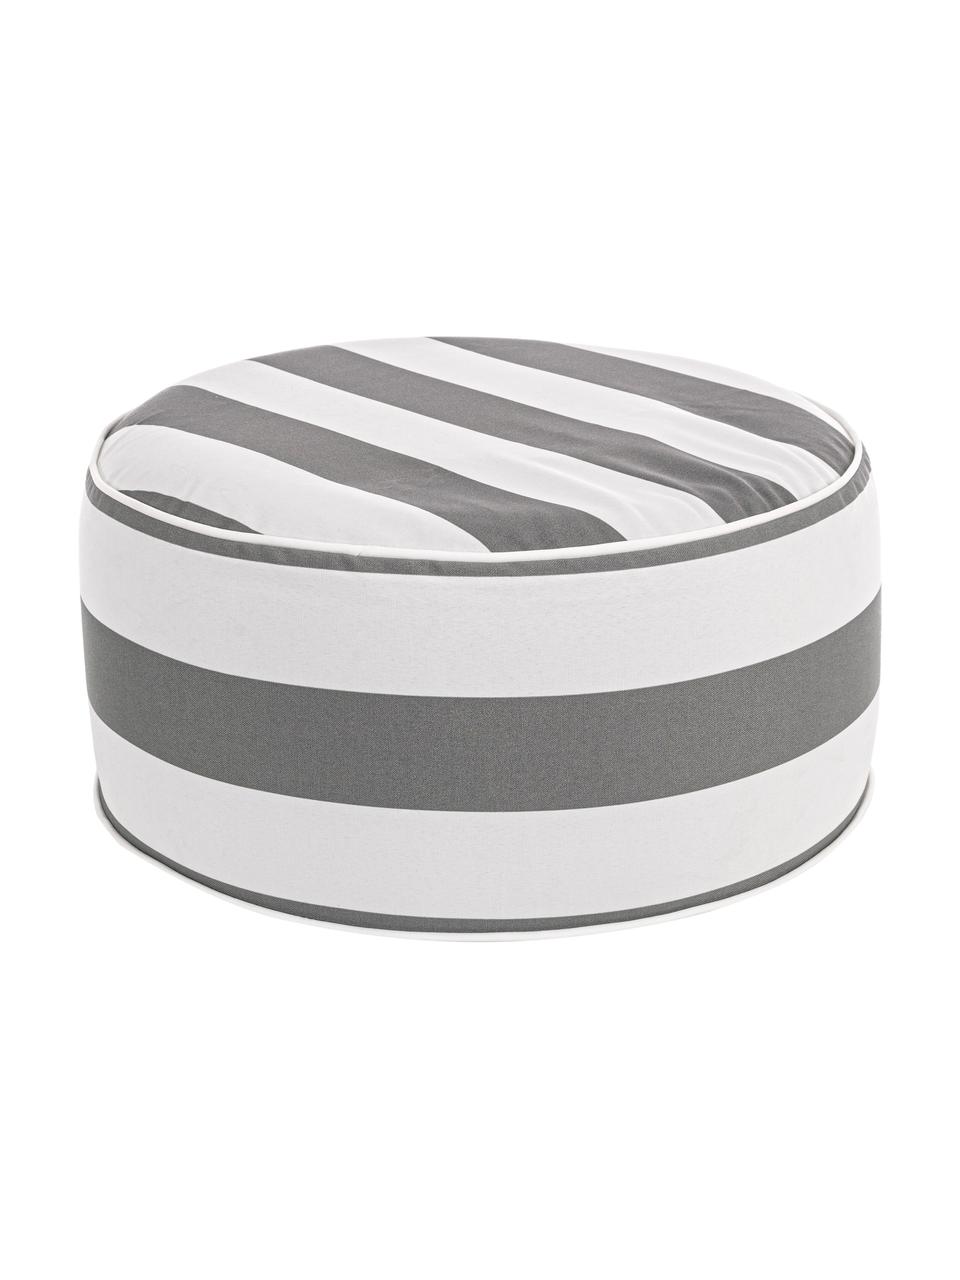 Aufblasbarer Outdoor-Pouf Stripes in Weiß/Grau, Bezug: 100% Polyestergewebe (200, Weiß, Grau, Ø 53 x H 23 cm